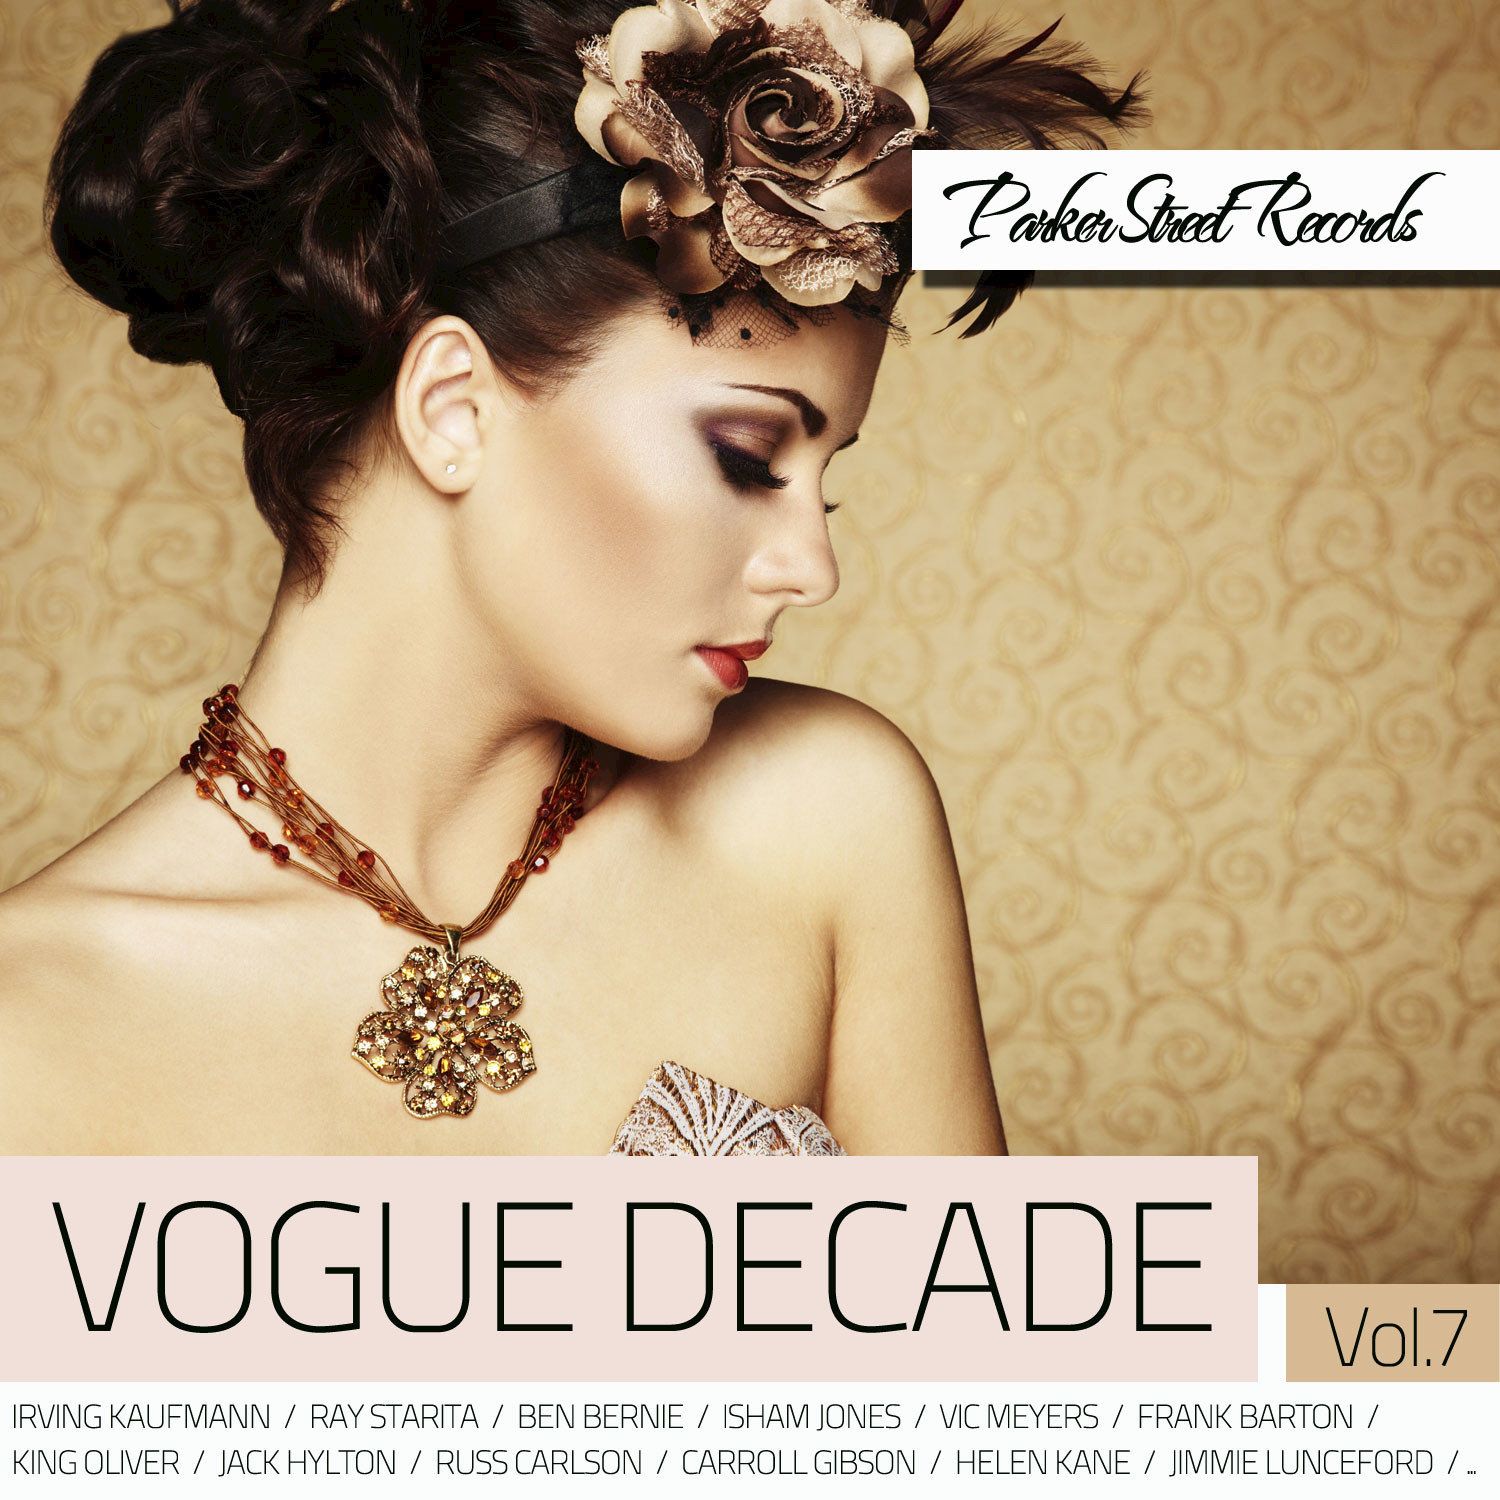 Vogue Decade, Vol. 7